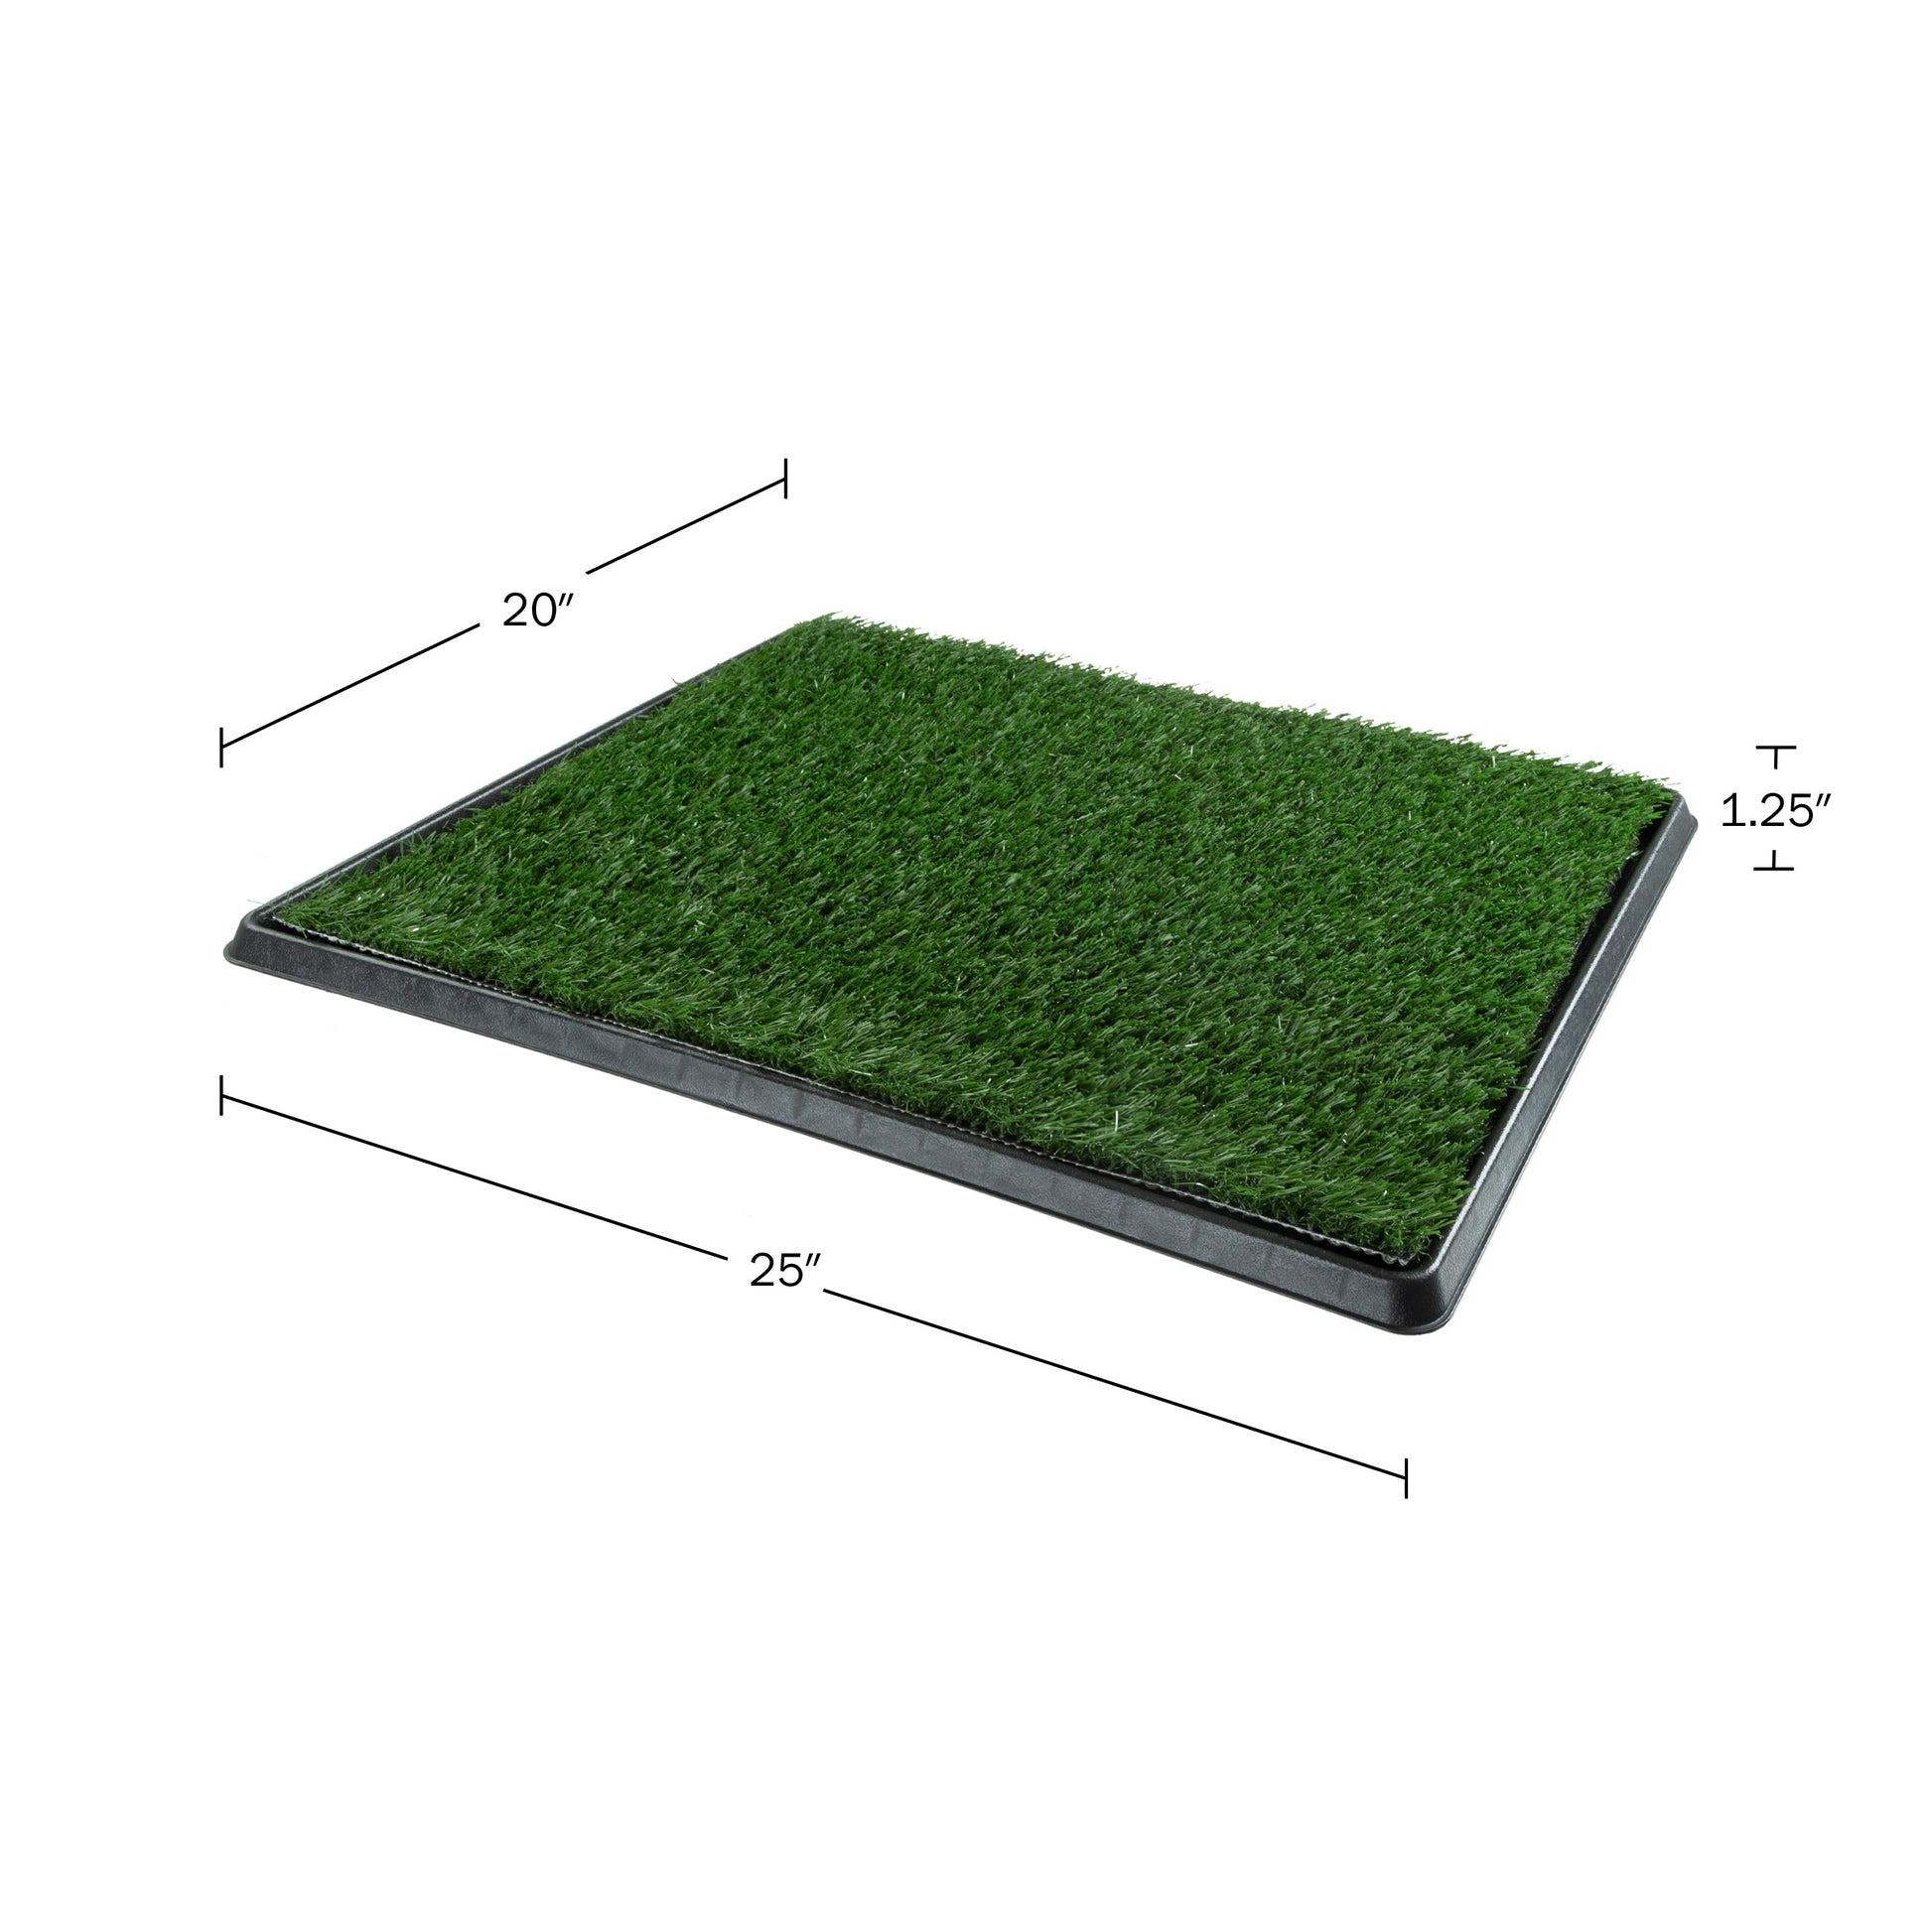 Petmaker Artificial Grass Pad Potty Training System 3pk - Small